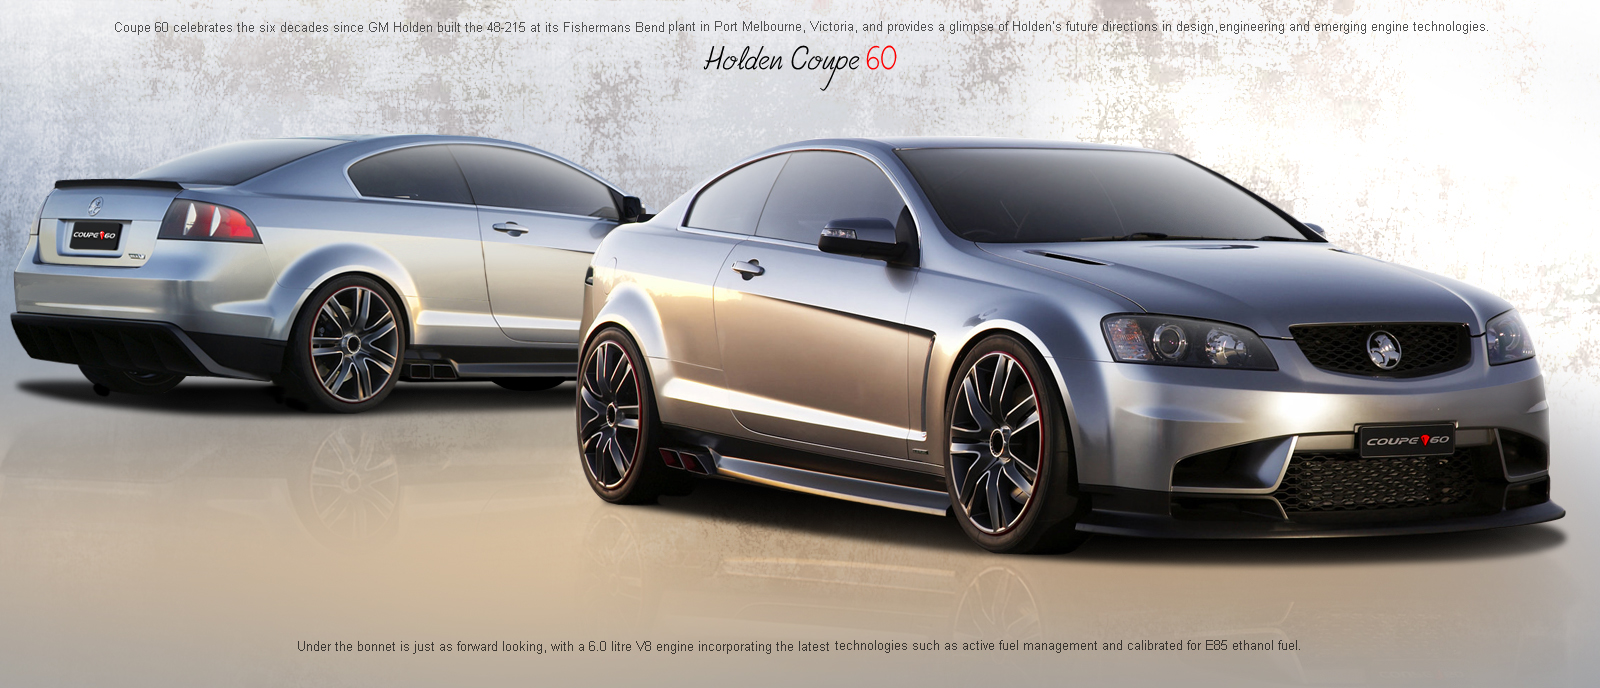 Holden Coupe 60 HD wallpapers, Desktop wallpaper - most viewed